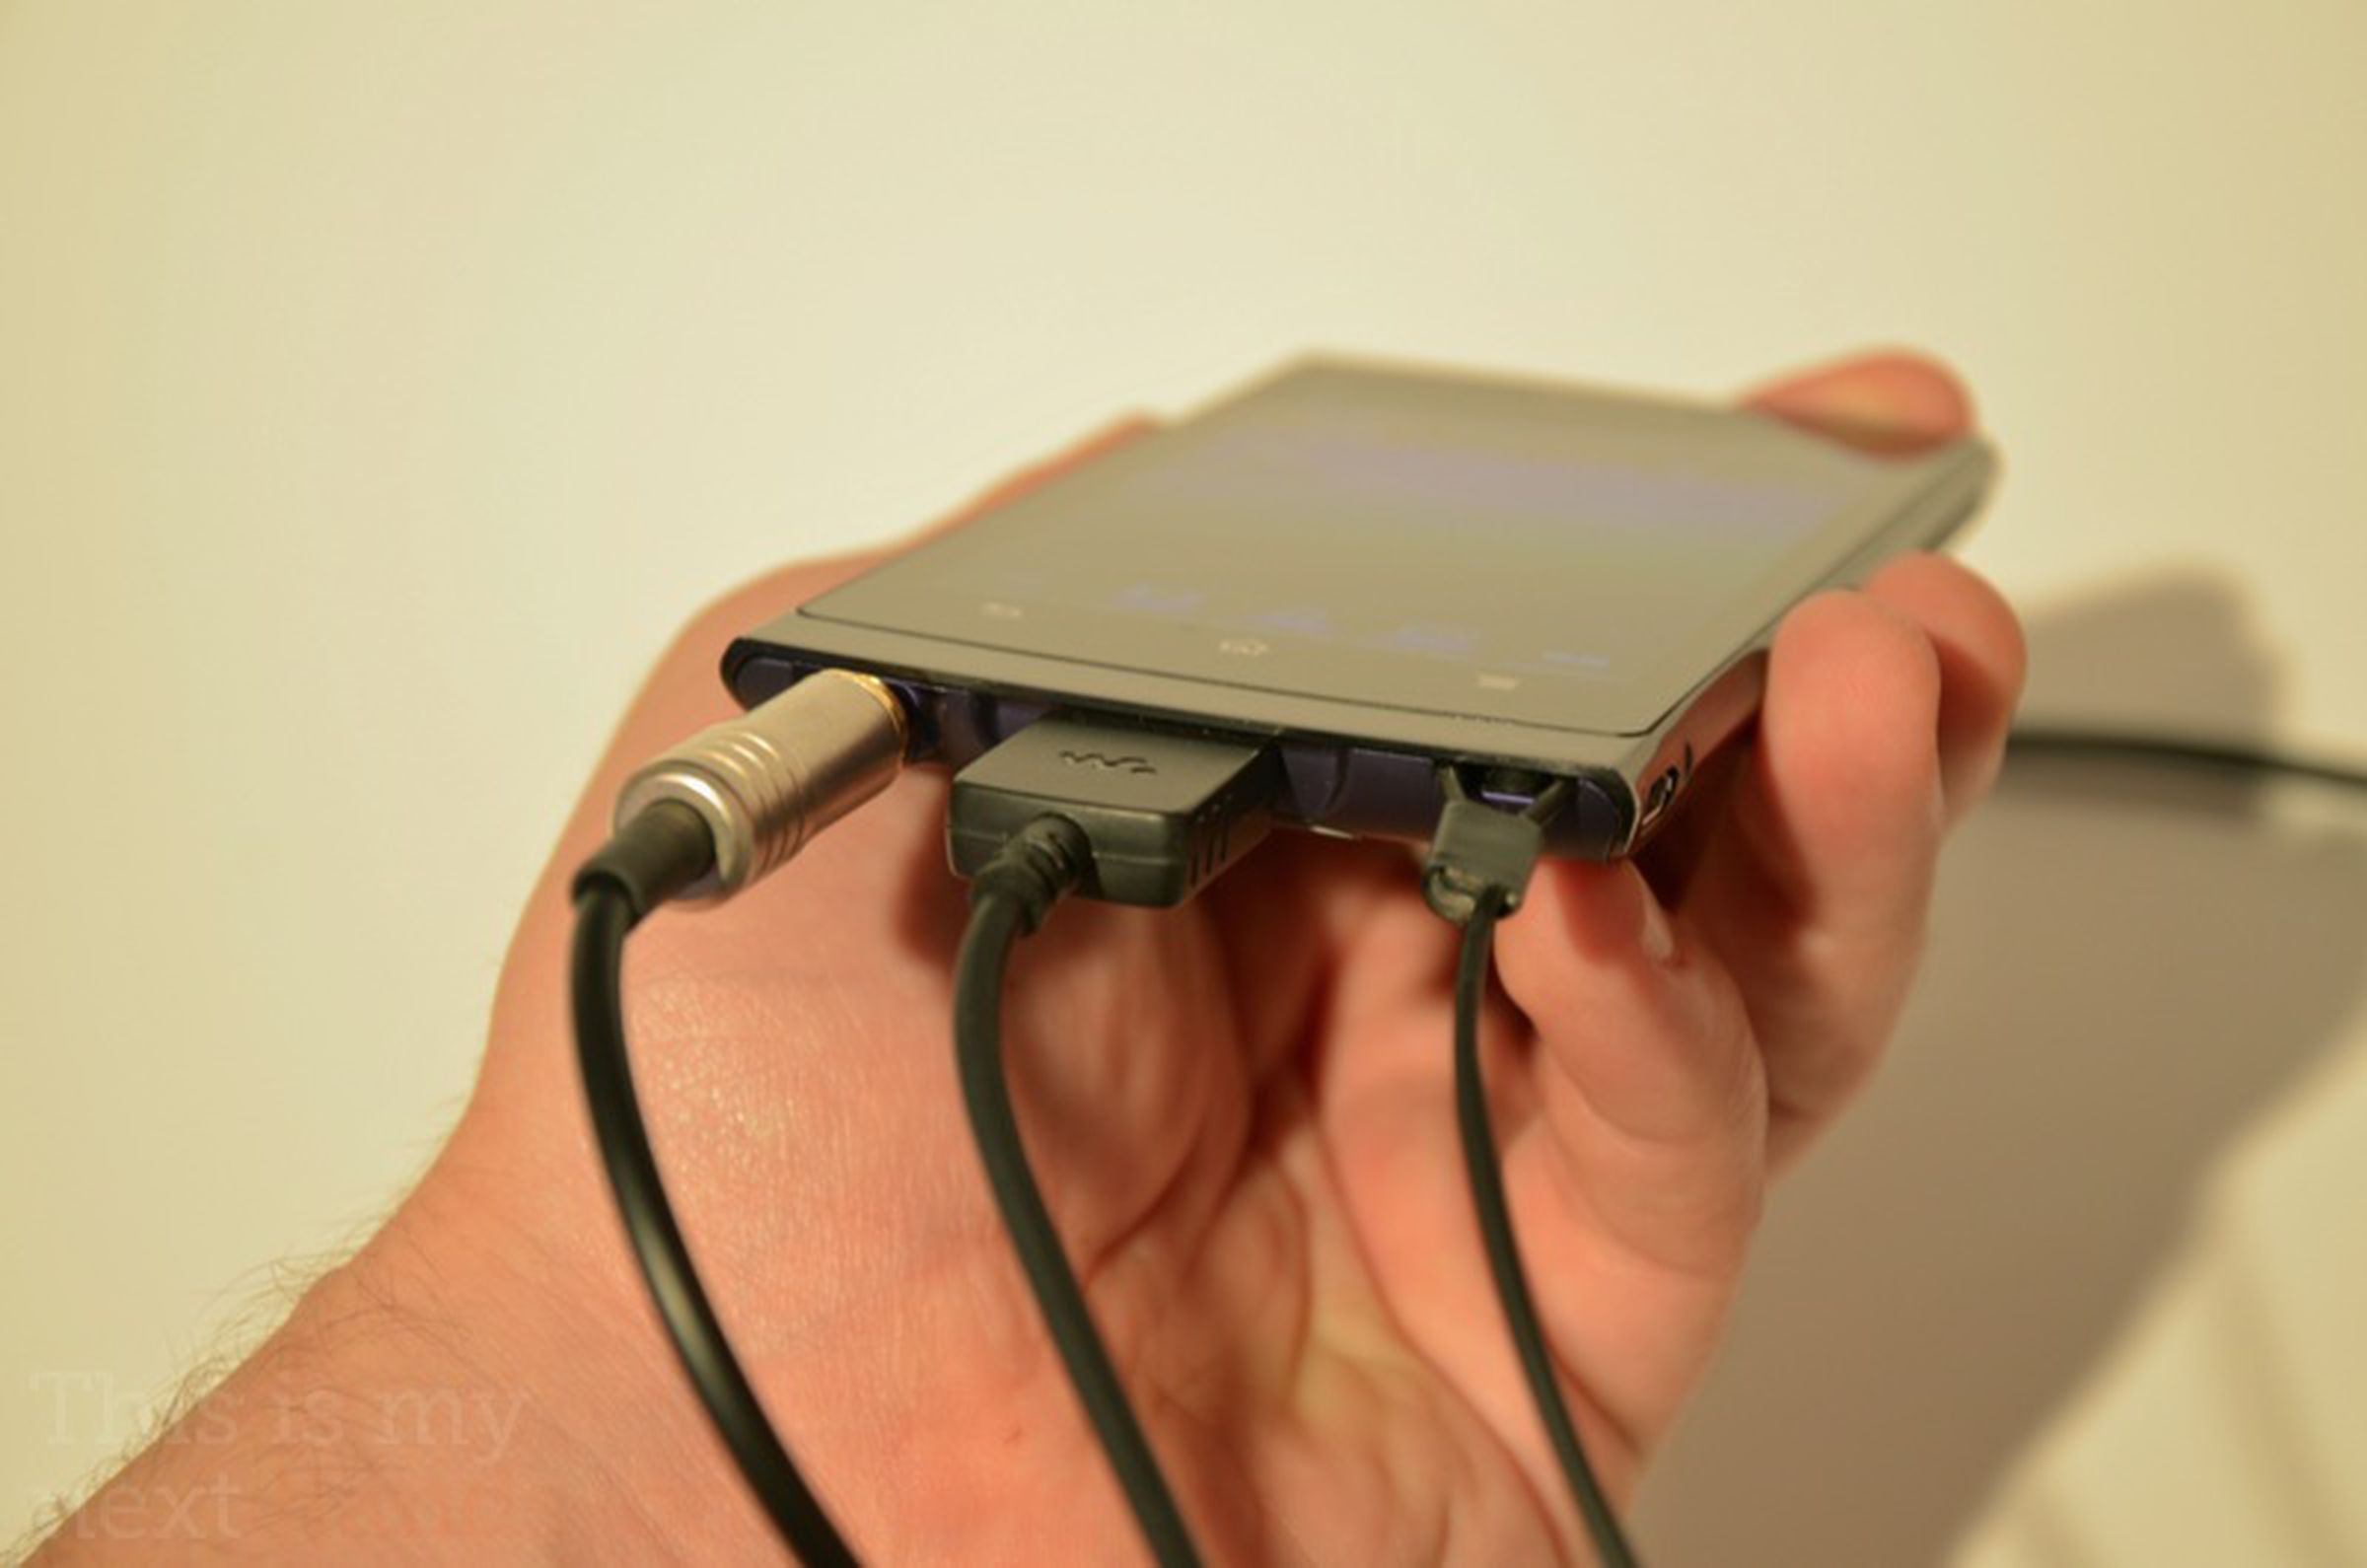 Sony Android Walkman prototype hands-on photos